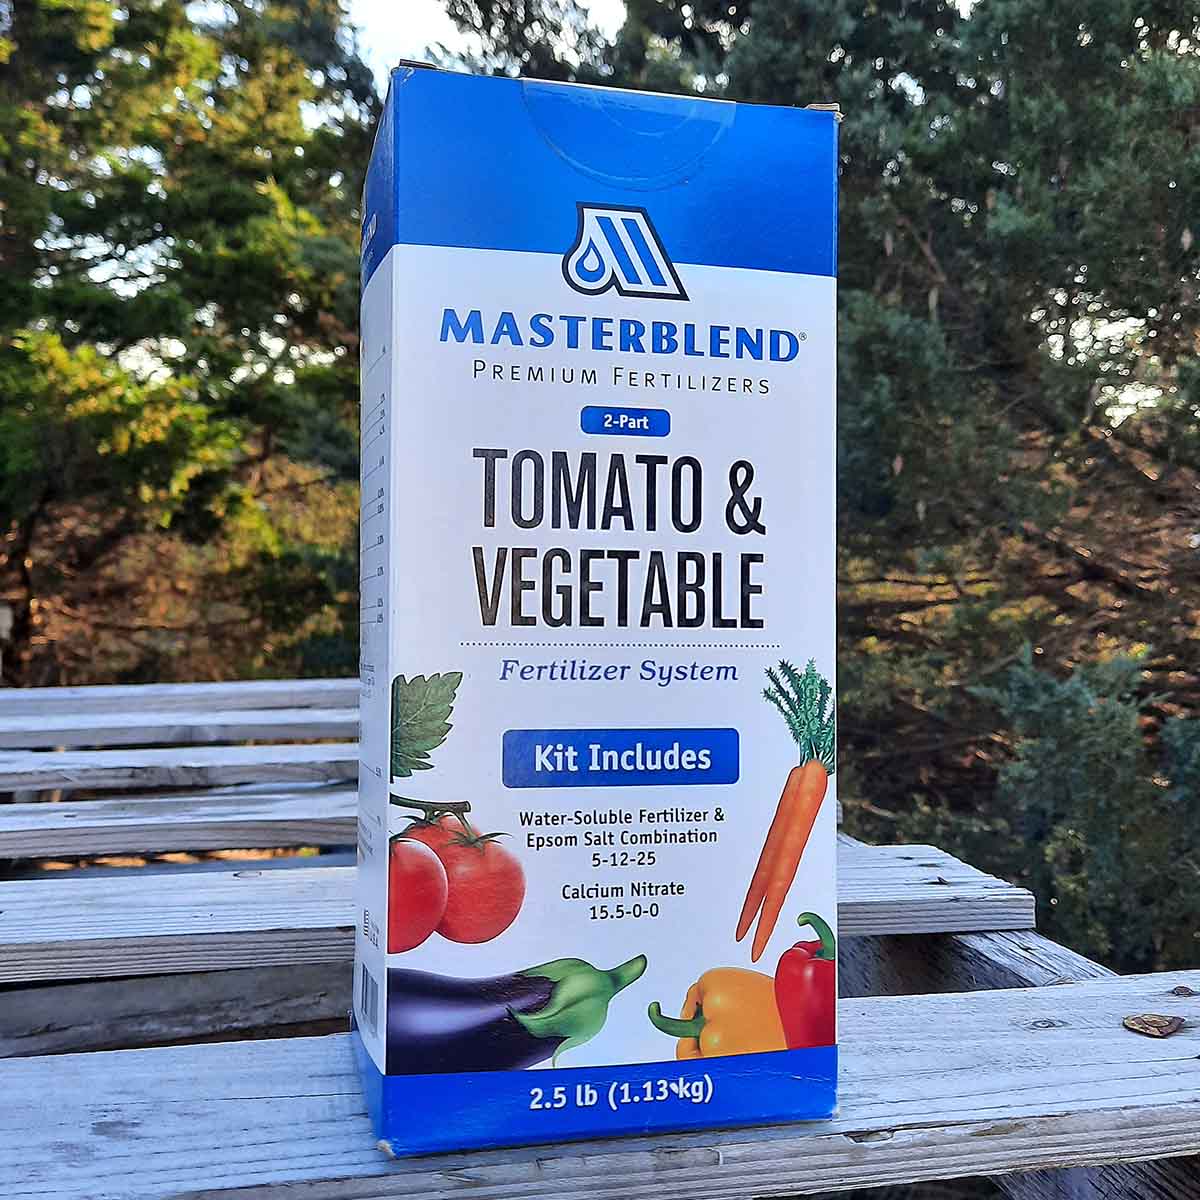 Masterblend Tomato & Vegetable Fertilizer Kit - 2.5 lb.